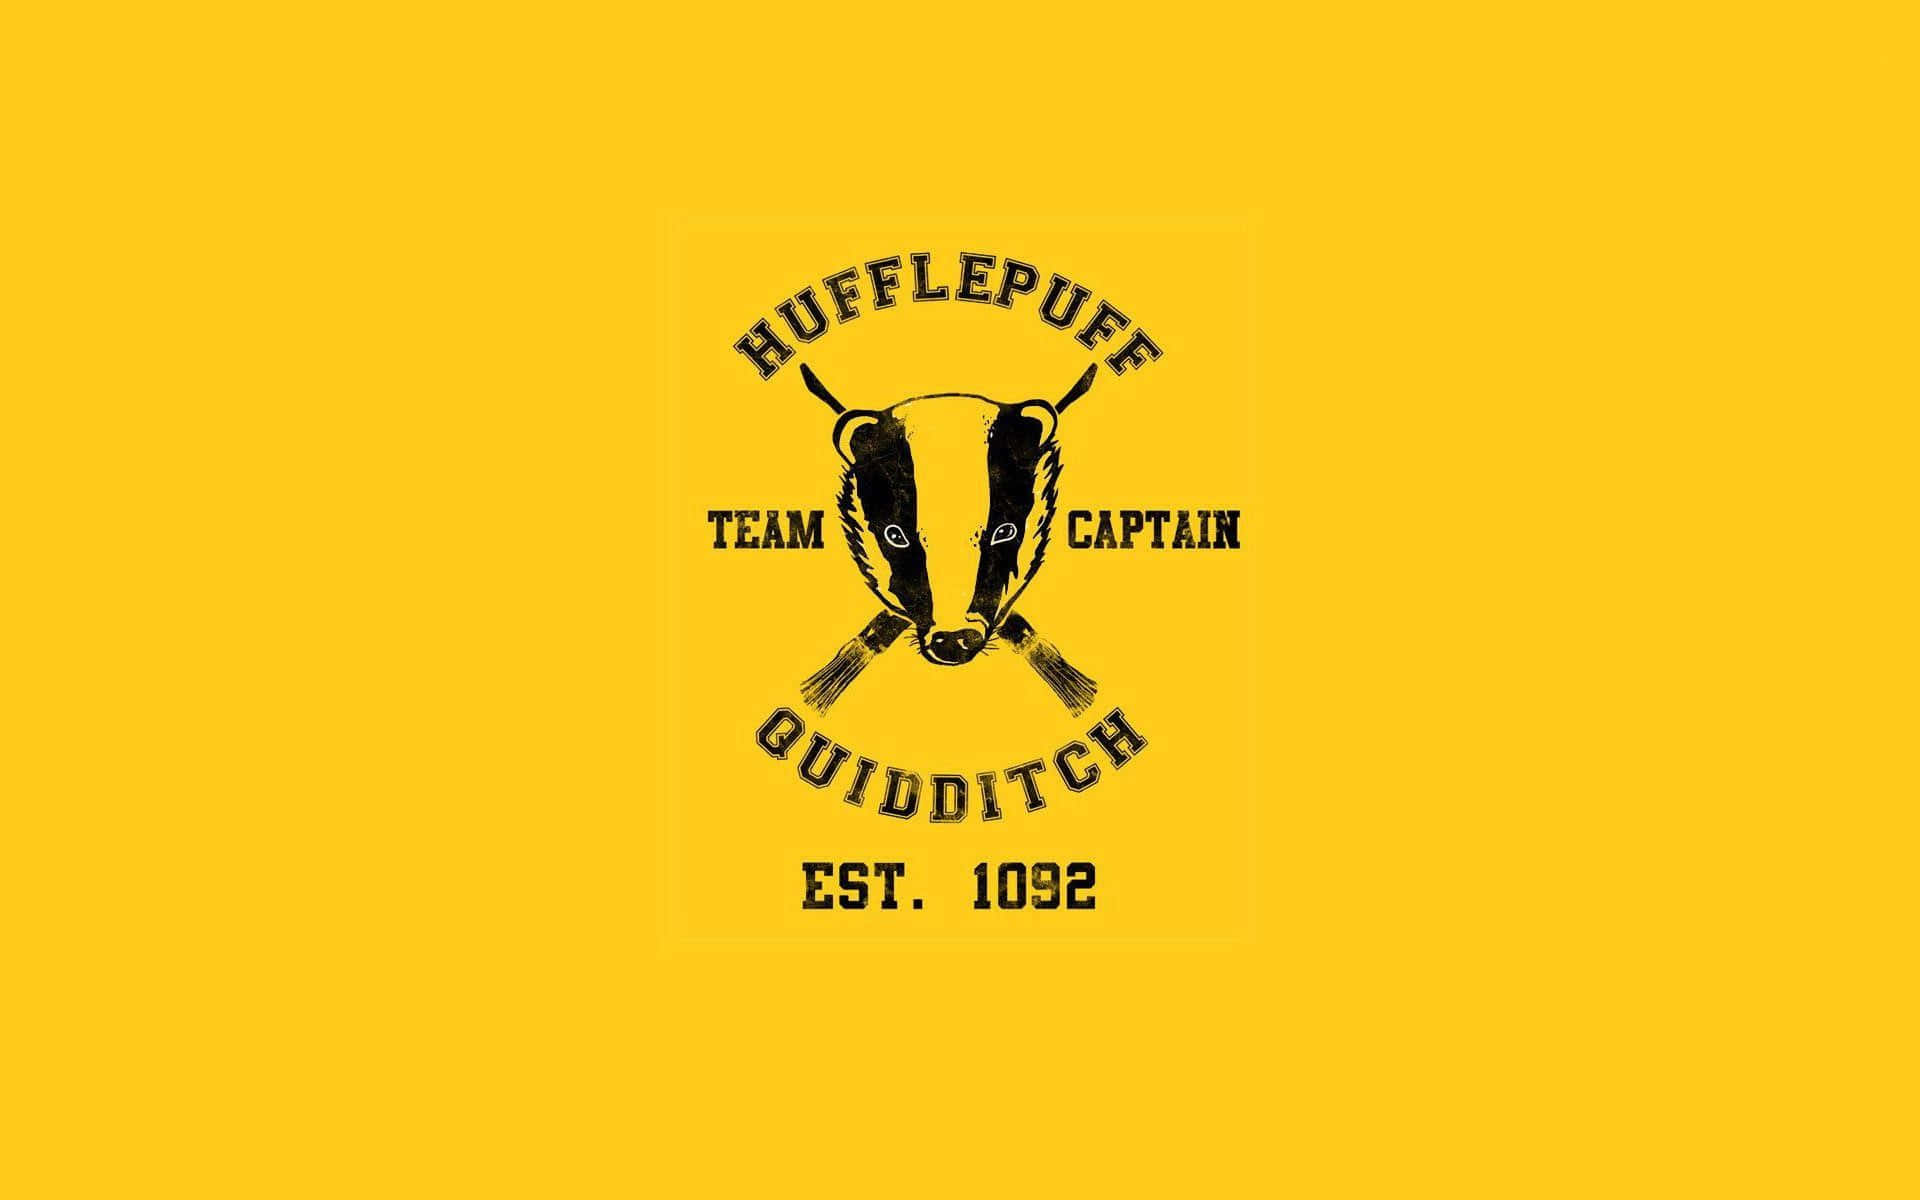 Hufflepuff Quidditch Team Captain Est1092 Wallpaper